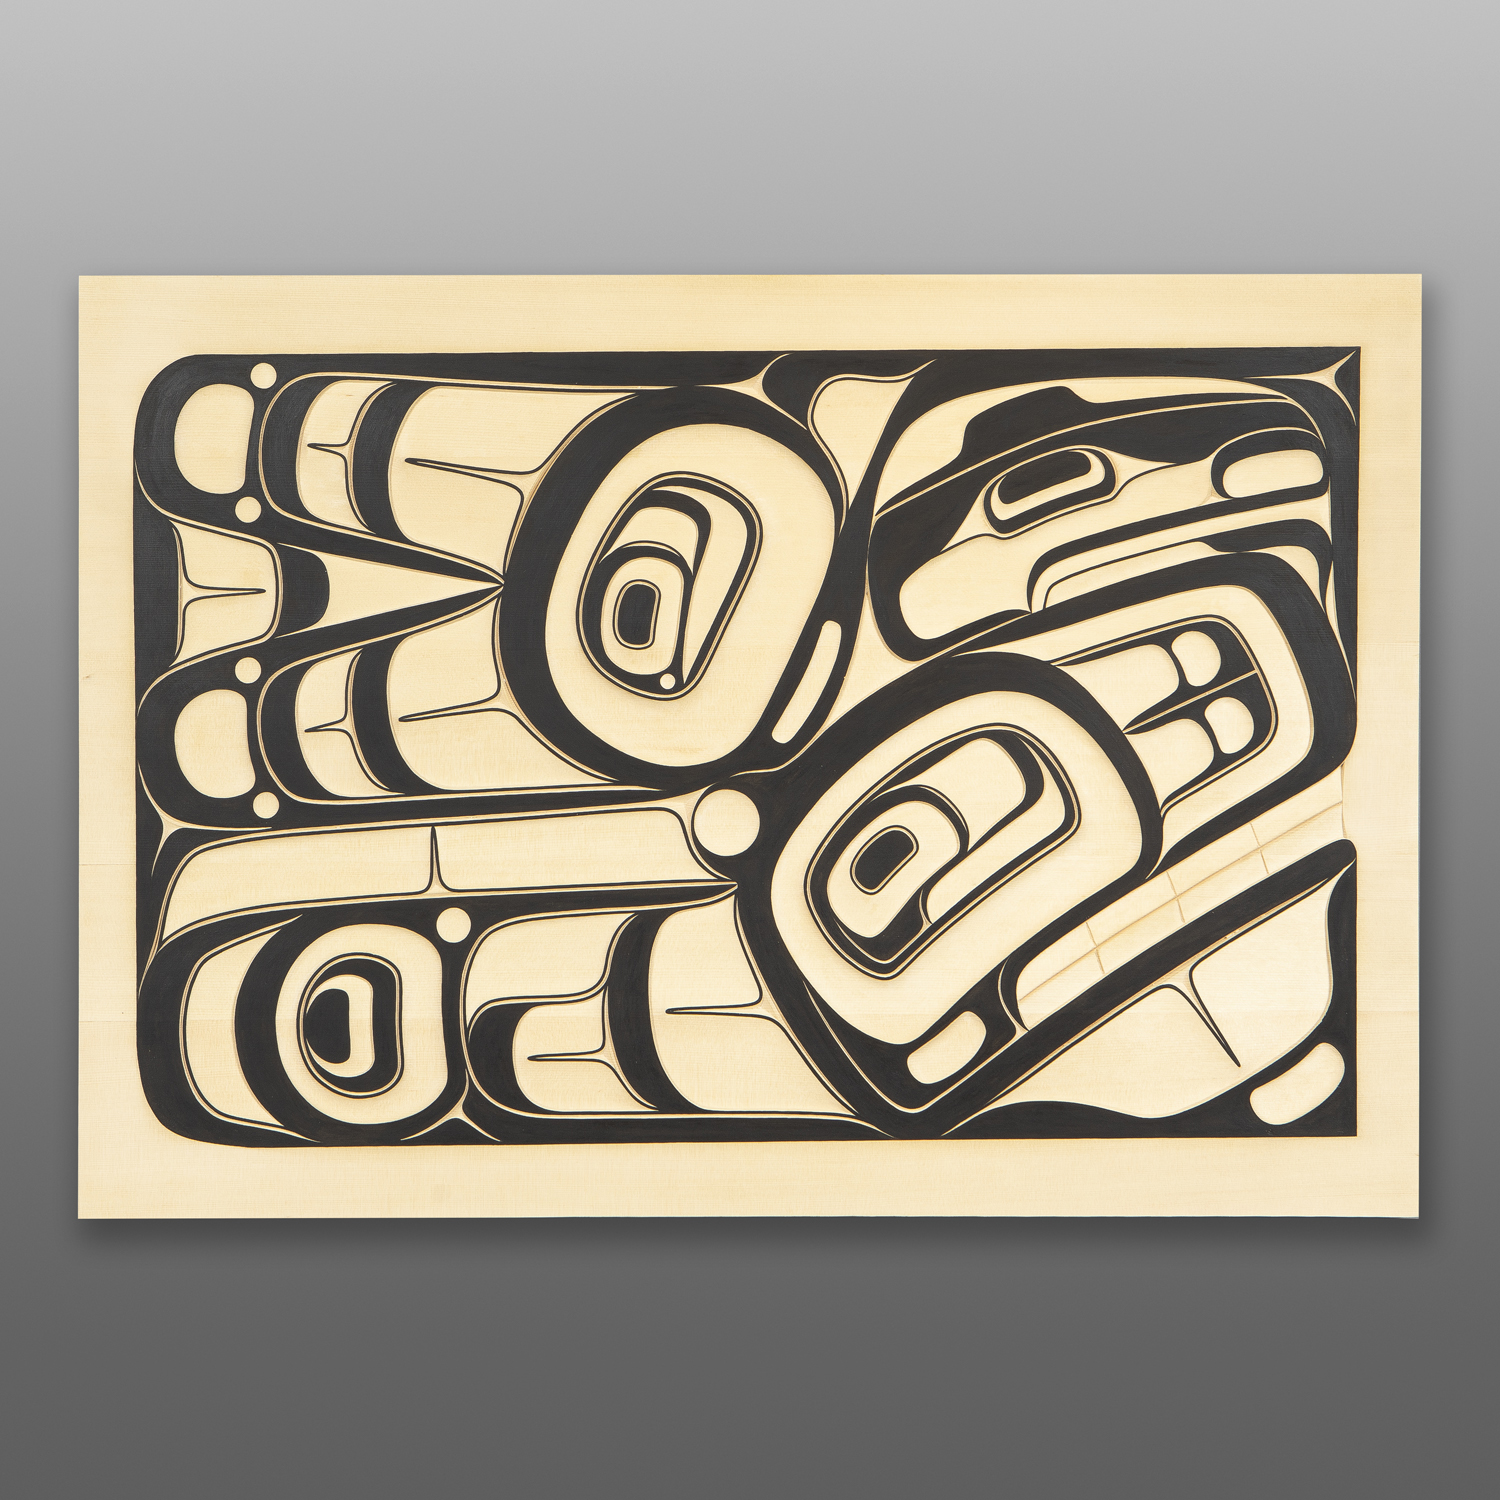 Killer Whale Panel
Shawn Aster
TsimshianYellow cedar, paint
28" x 19½" x 1¼"
$5900